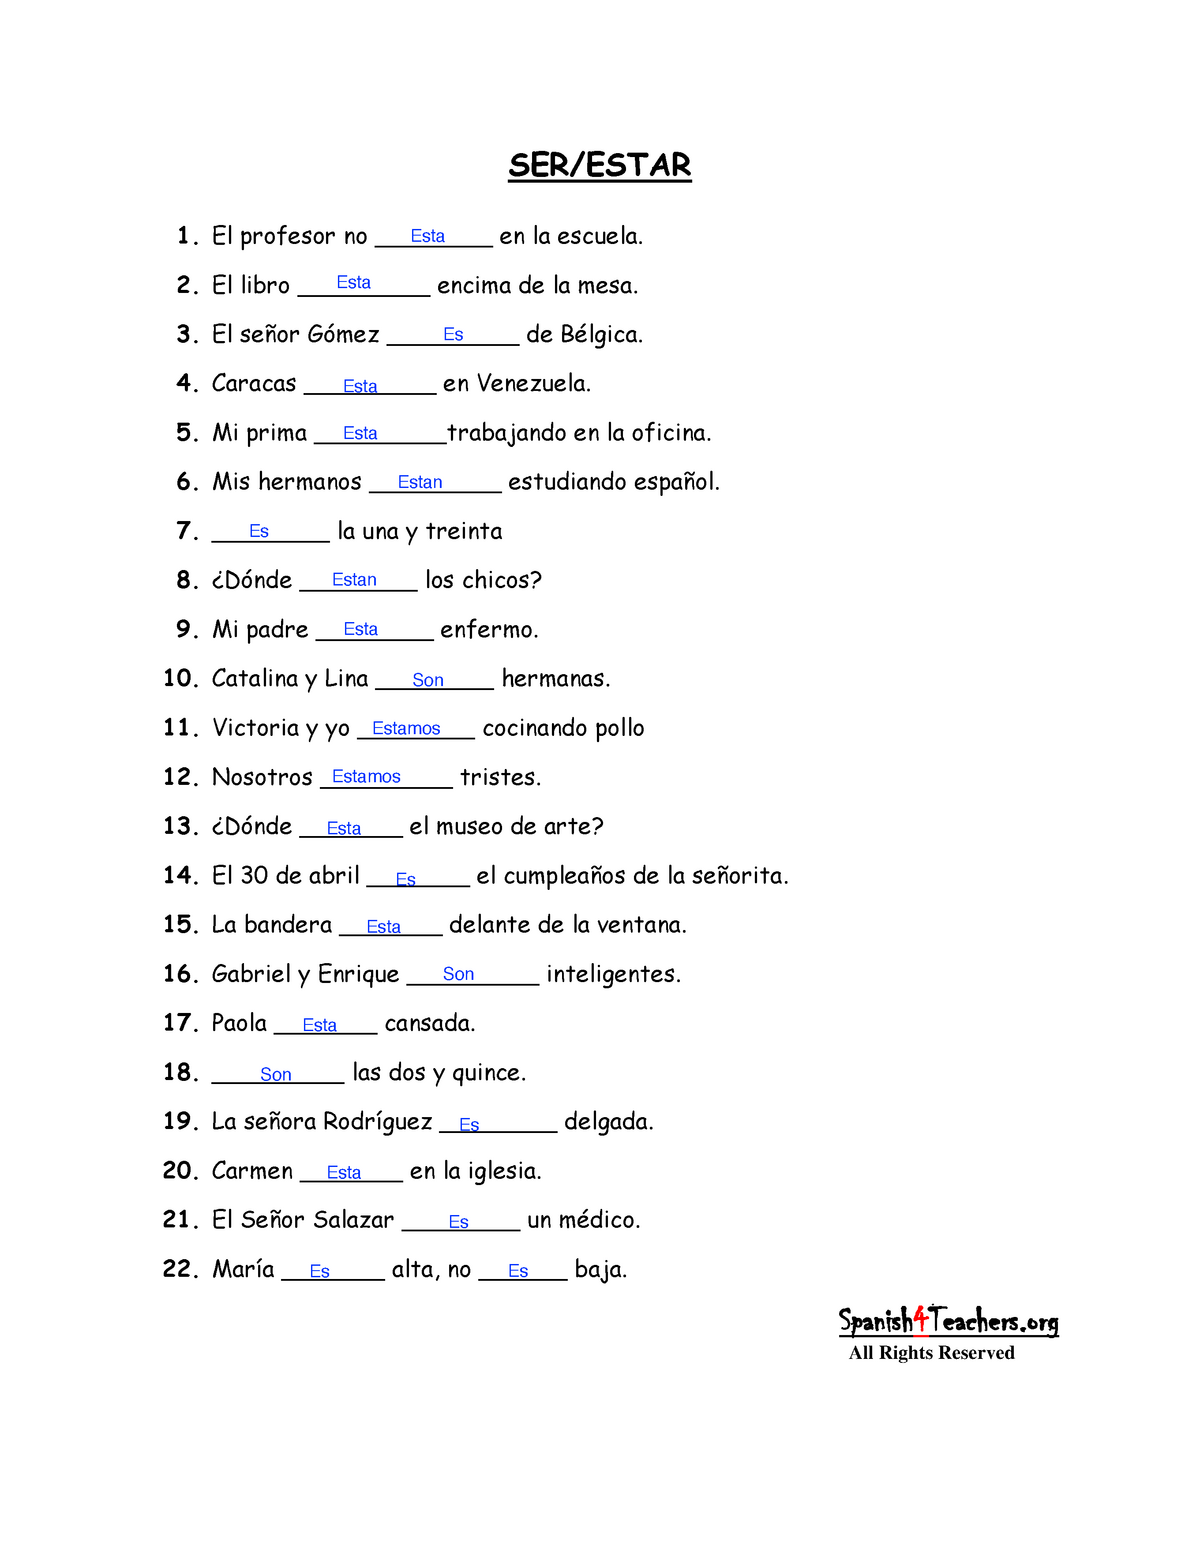 Spanish Ser Estar Worksheet - SPAN 20 - StuDocu With Ser Estar Worksheet Answers